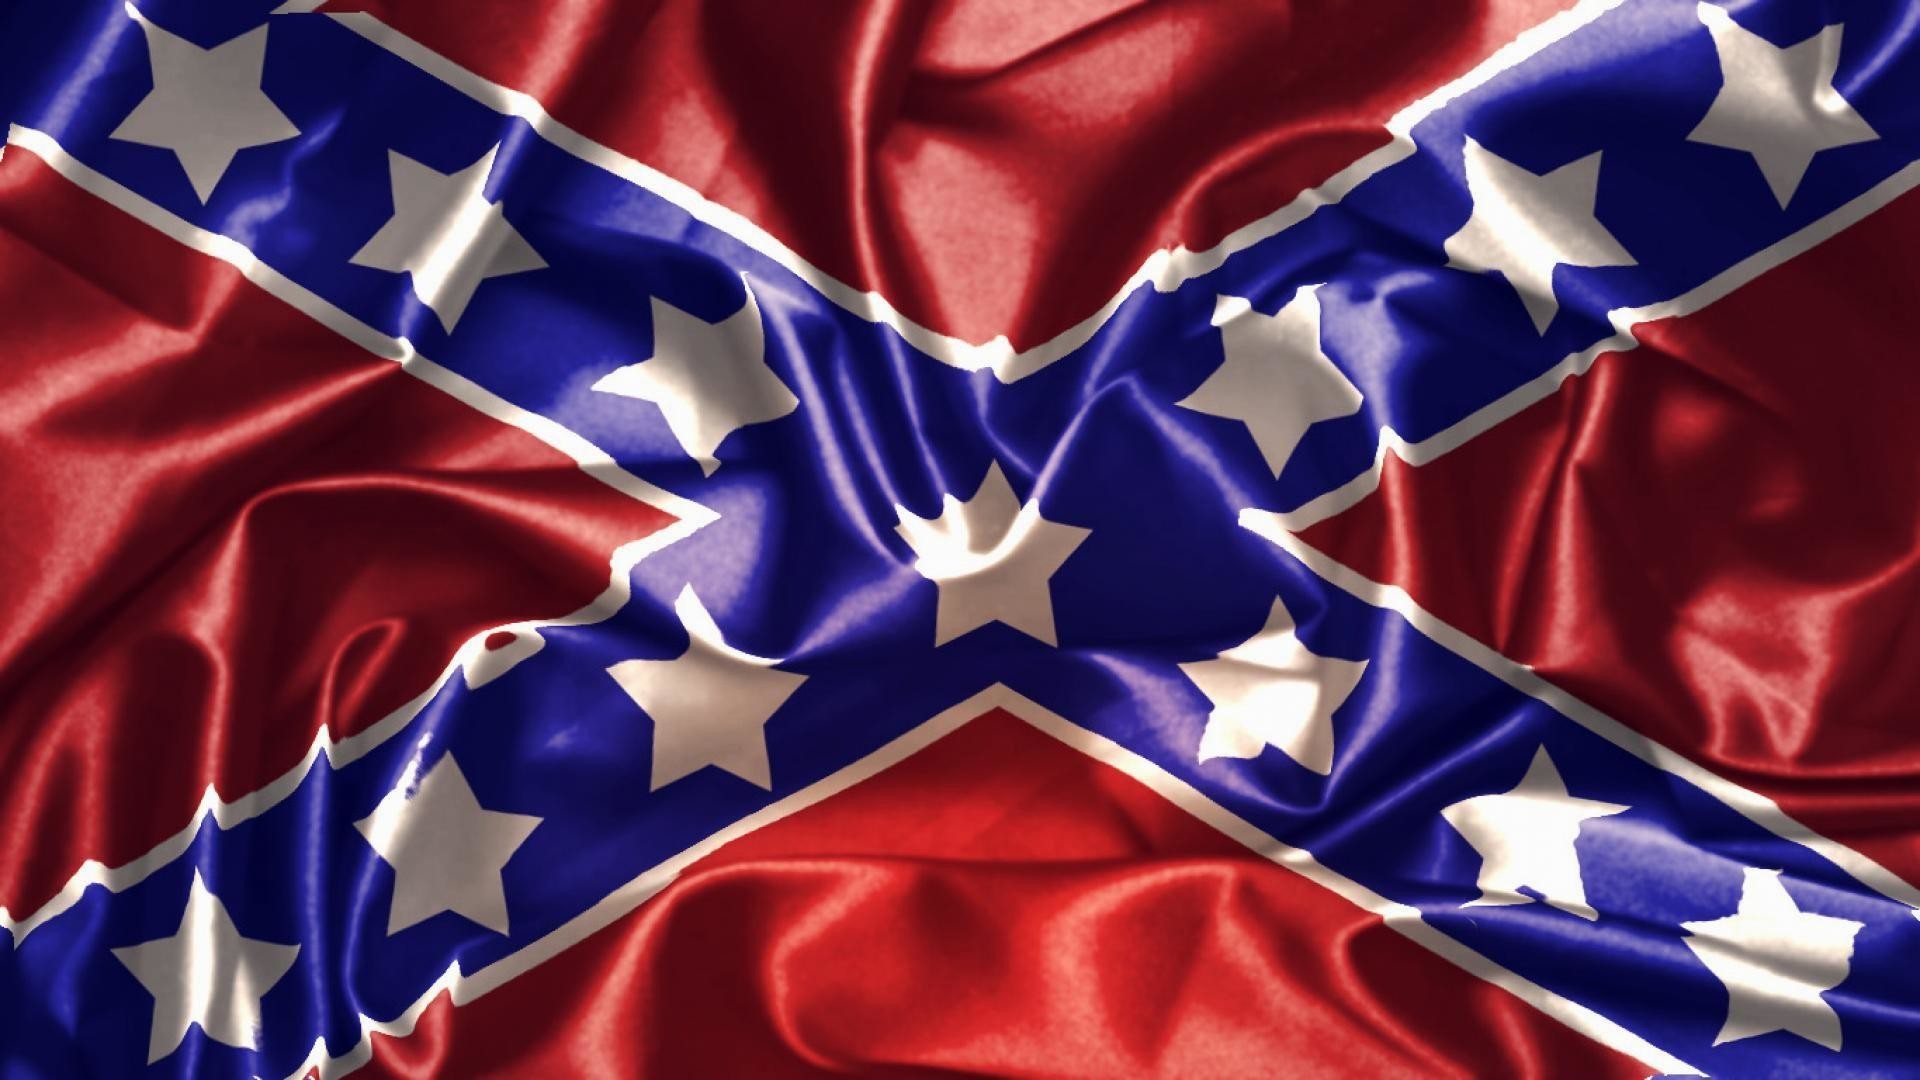 Confederate flag pictures desktop 1920 x 1080 kB